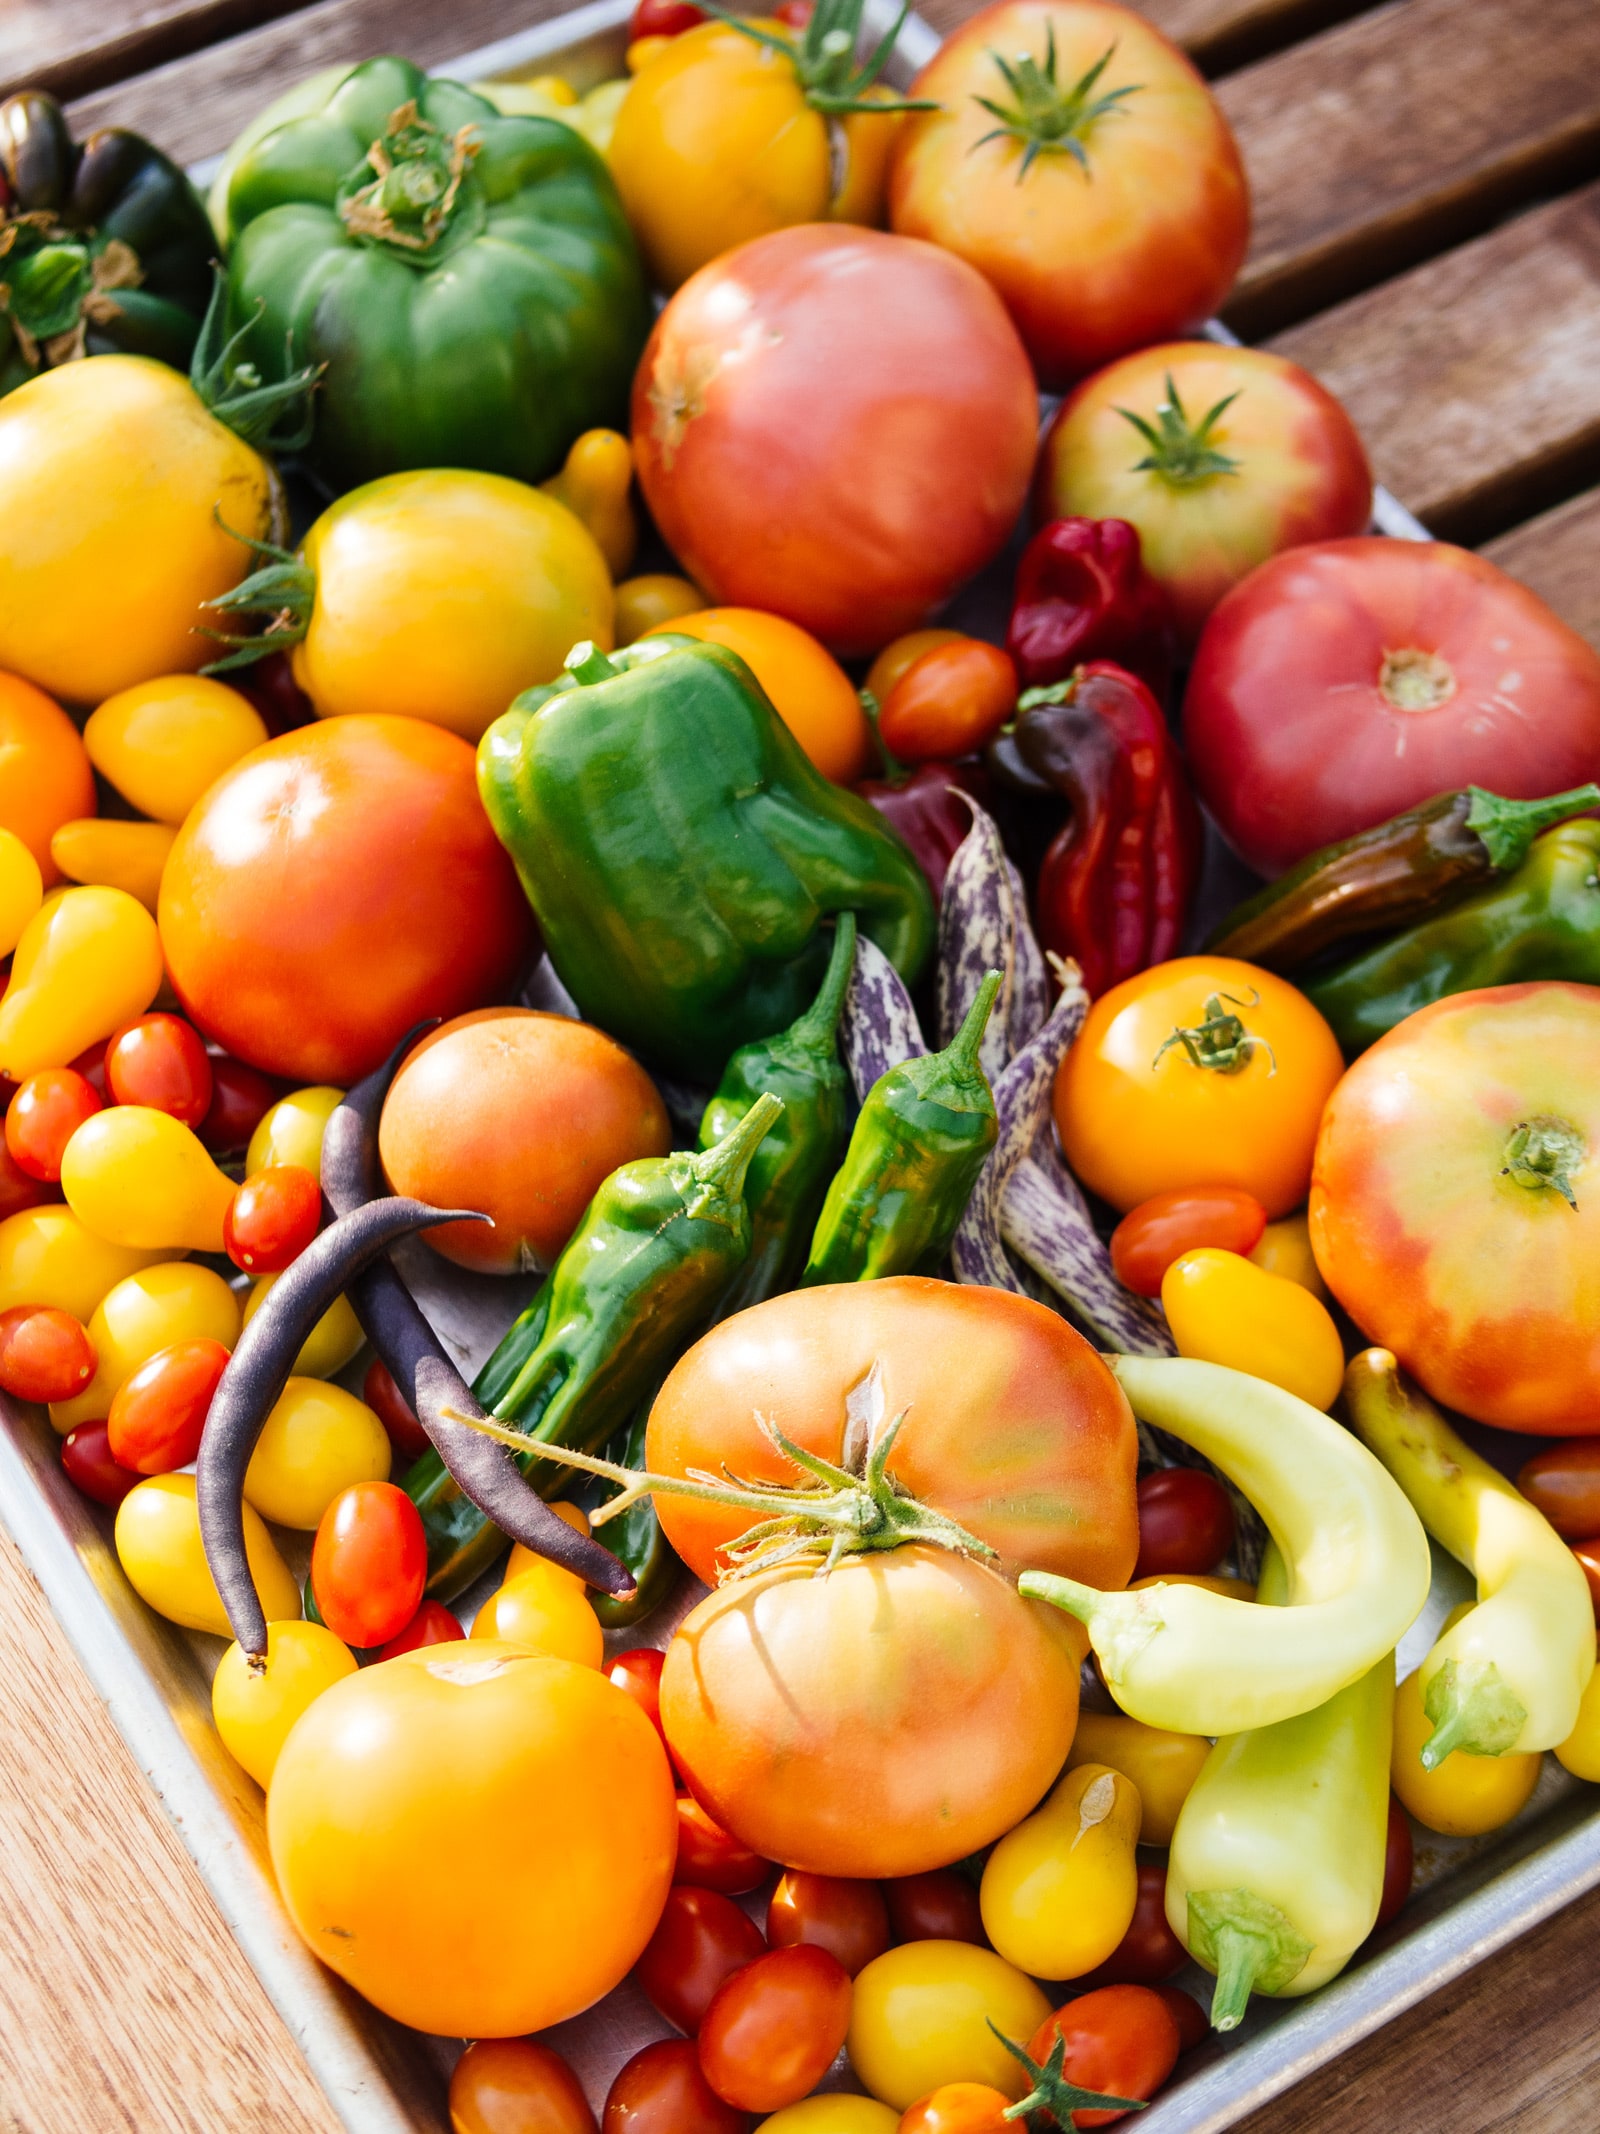 Harvest your remaining summer vegetables